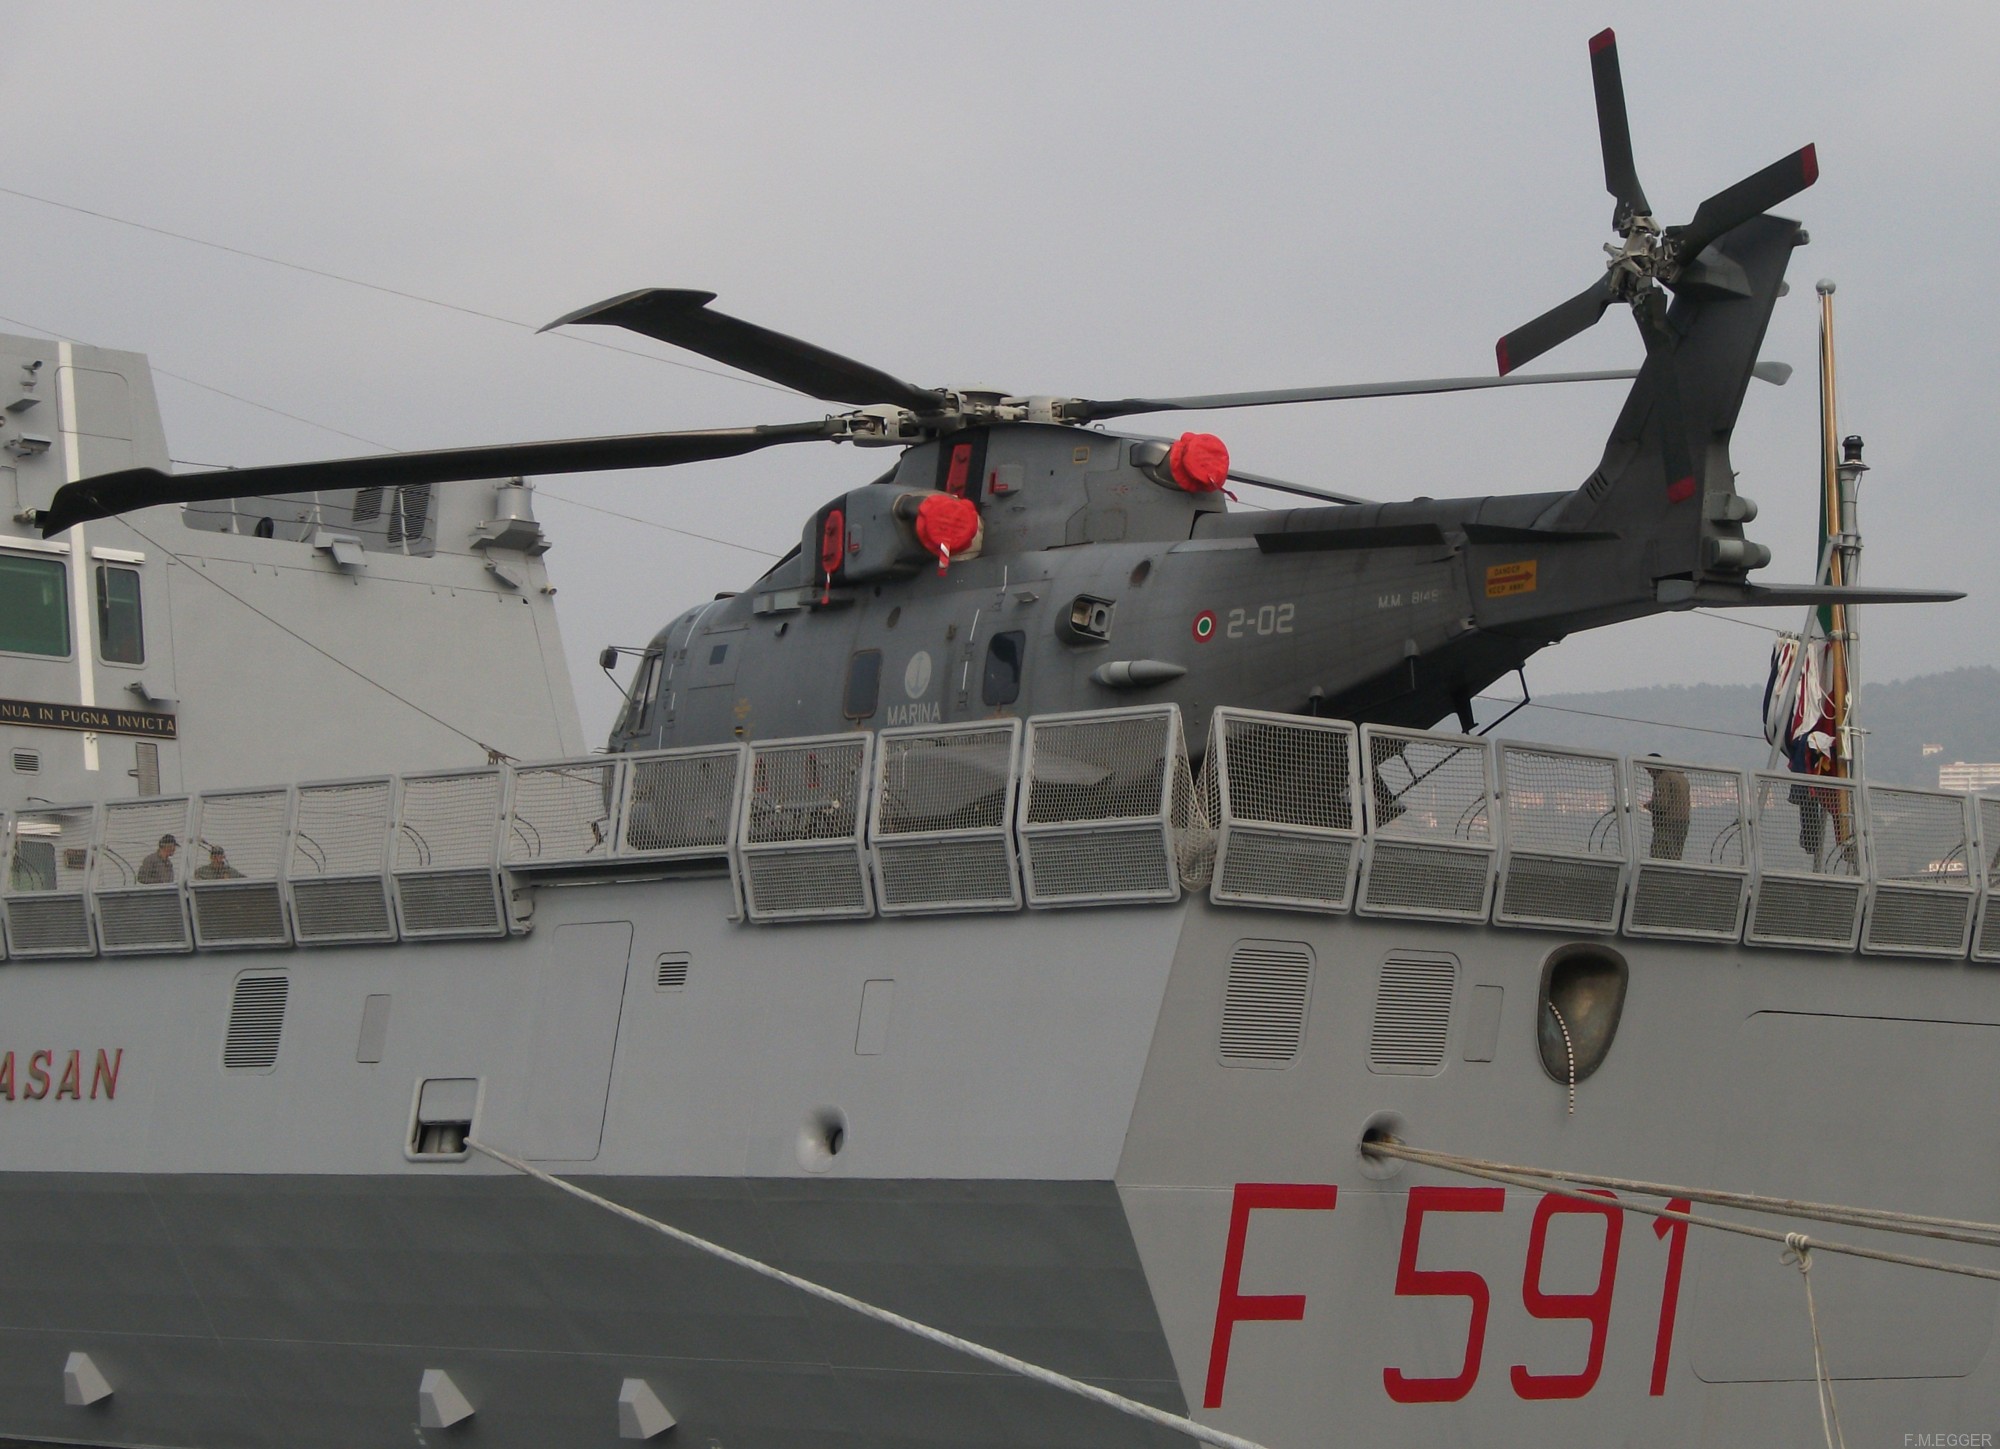 f-591 virginio fasan frigate italian navy marine militare 09 agusta westland sh-101a eh101 helicopter